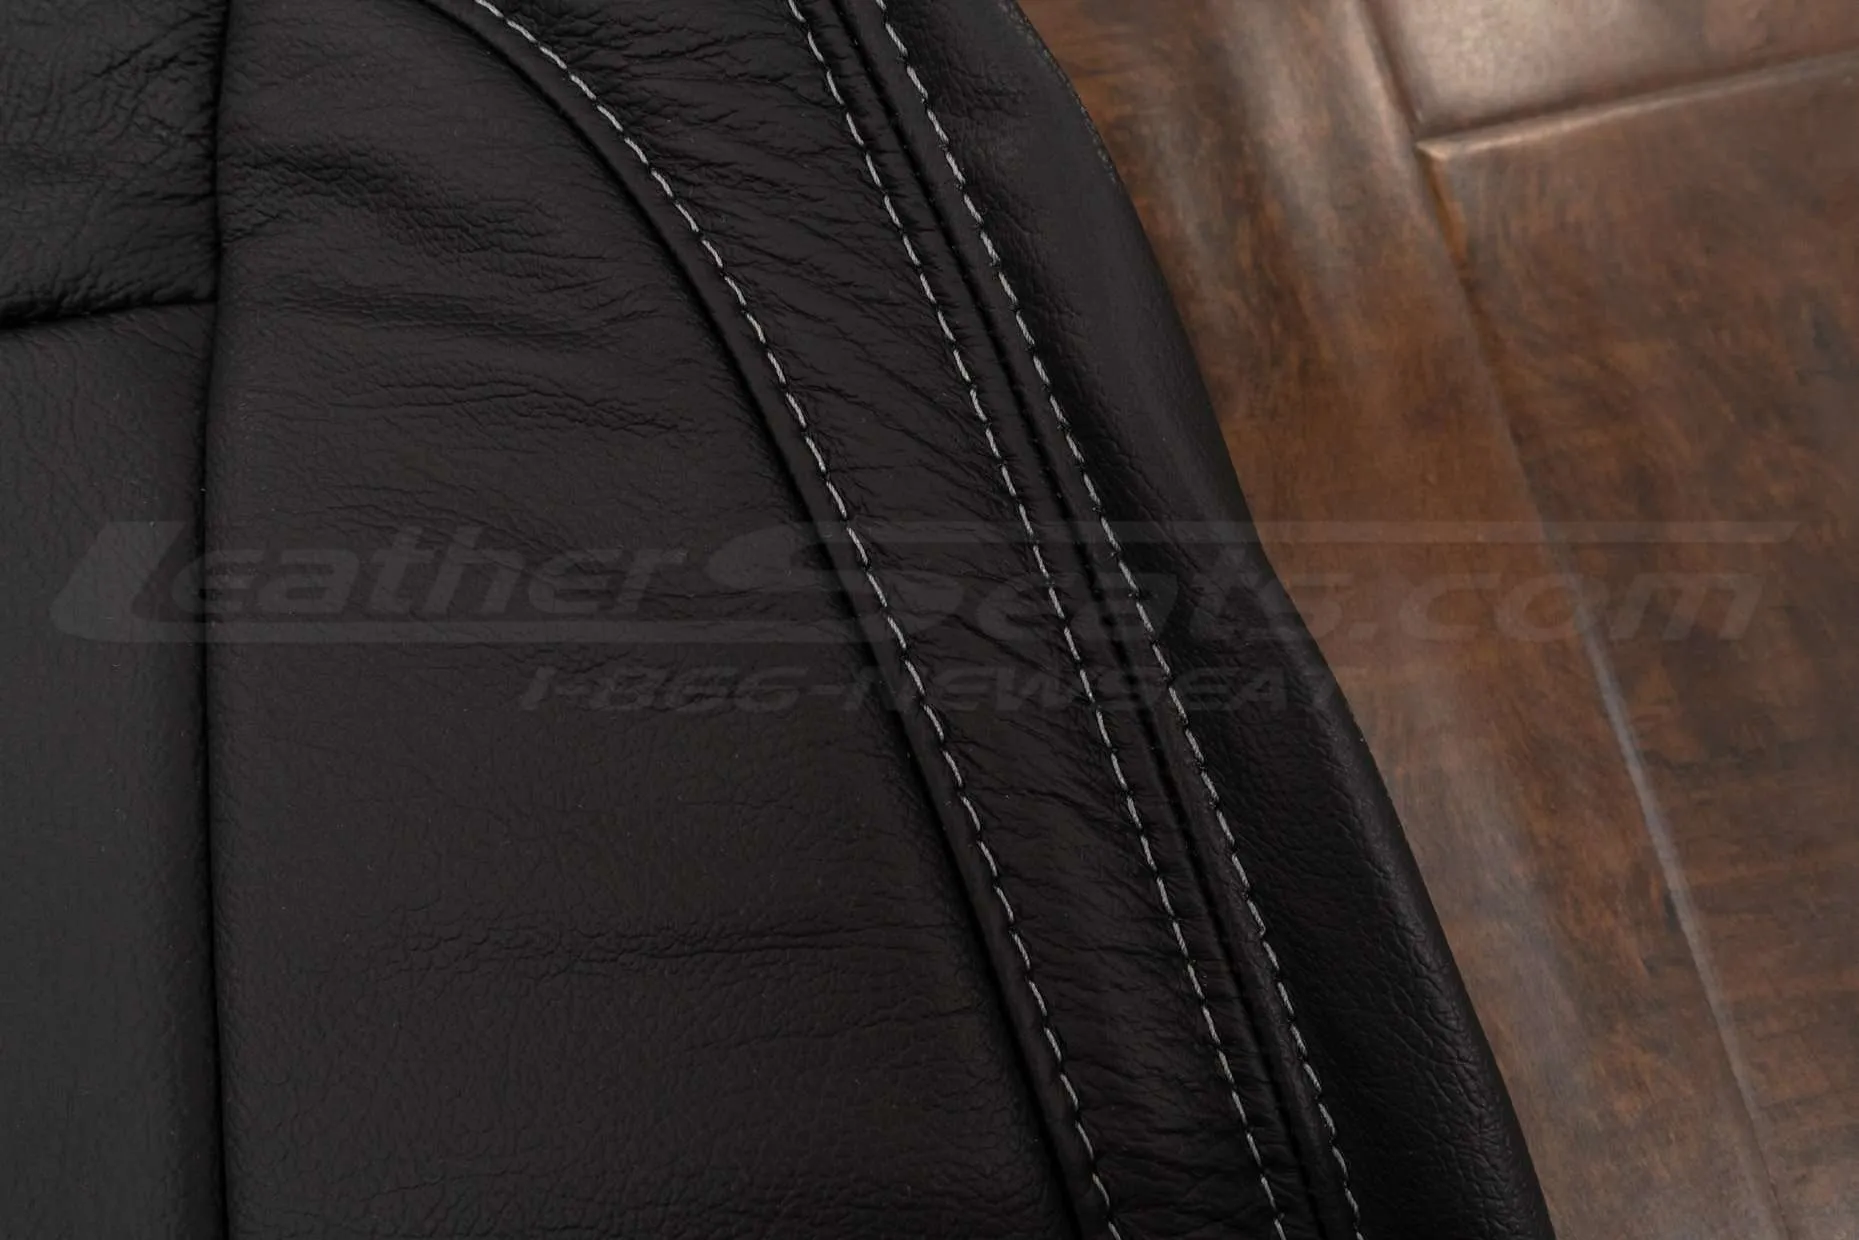 Dove-Grey double stitching on Black upholstery kit